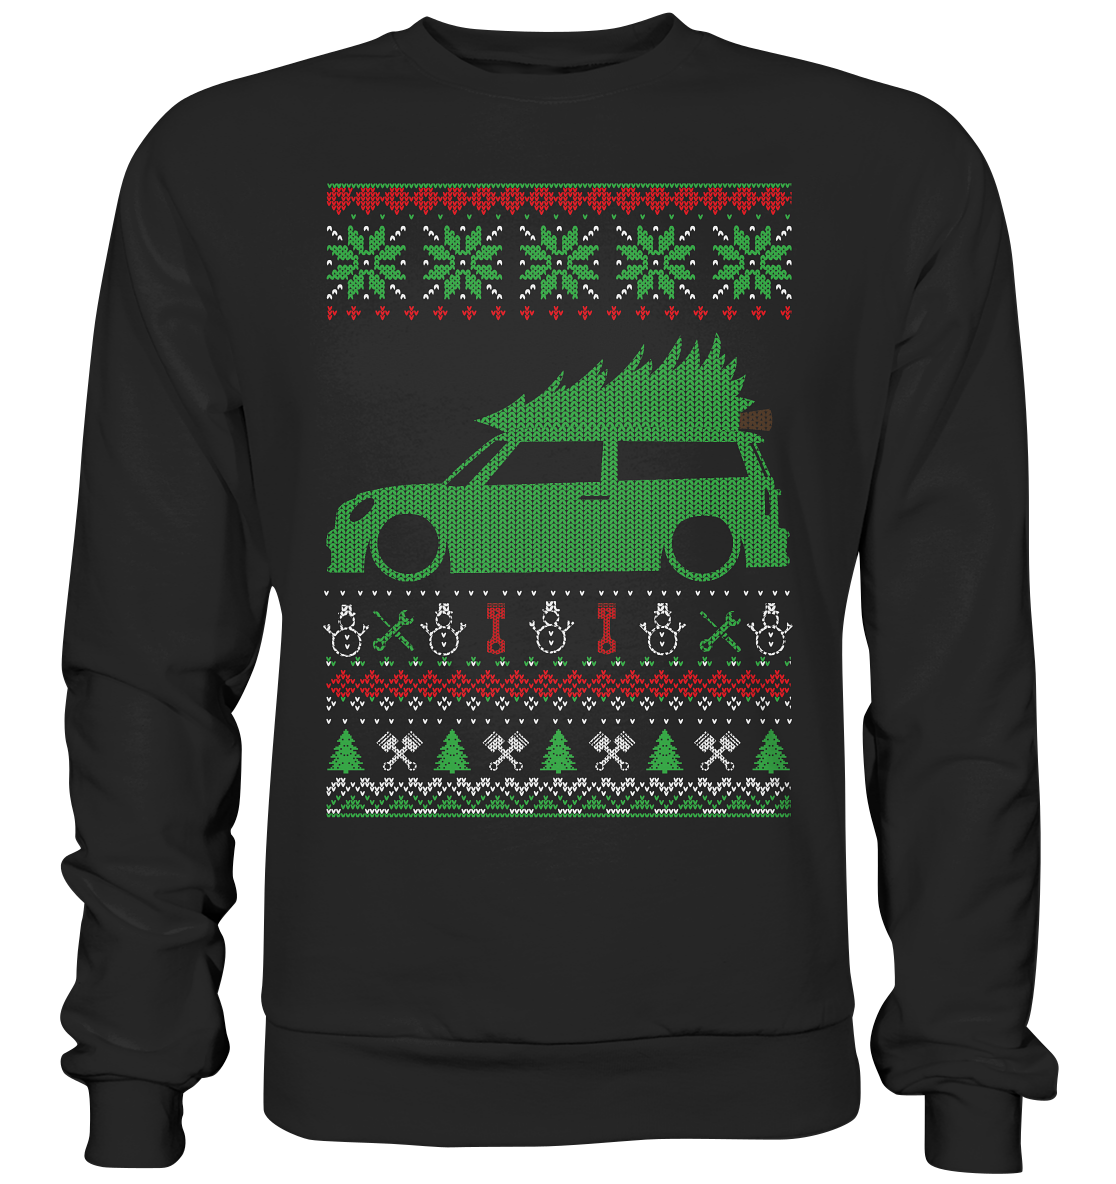 CODUGLY_MGKR55C - Premium Sweatshirt